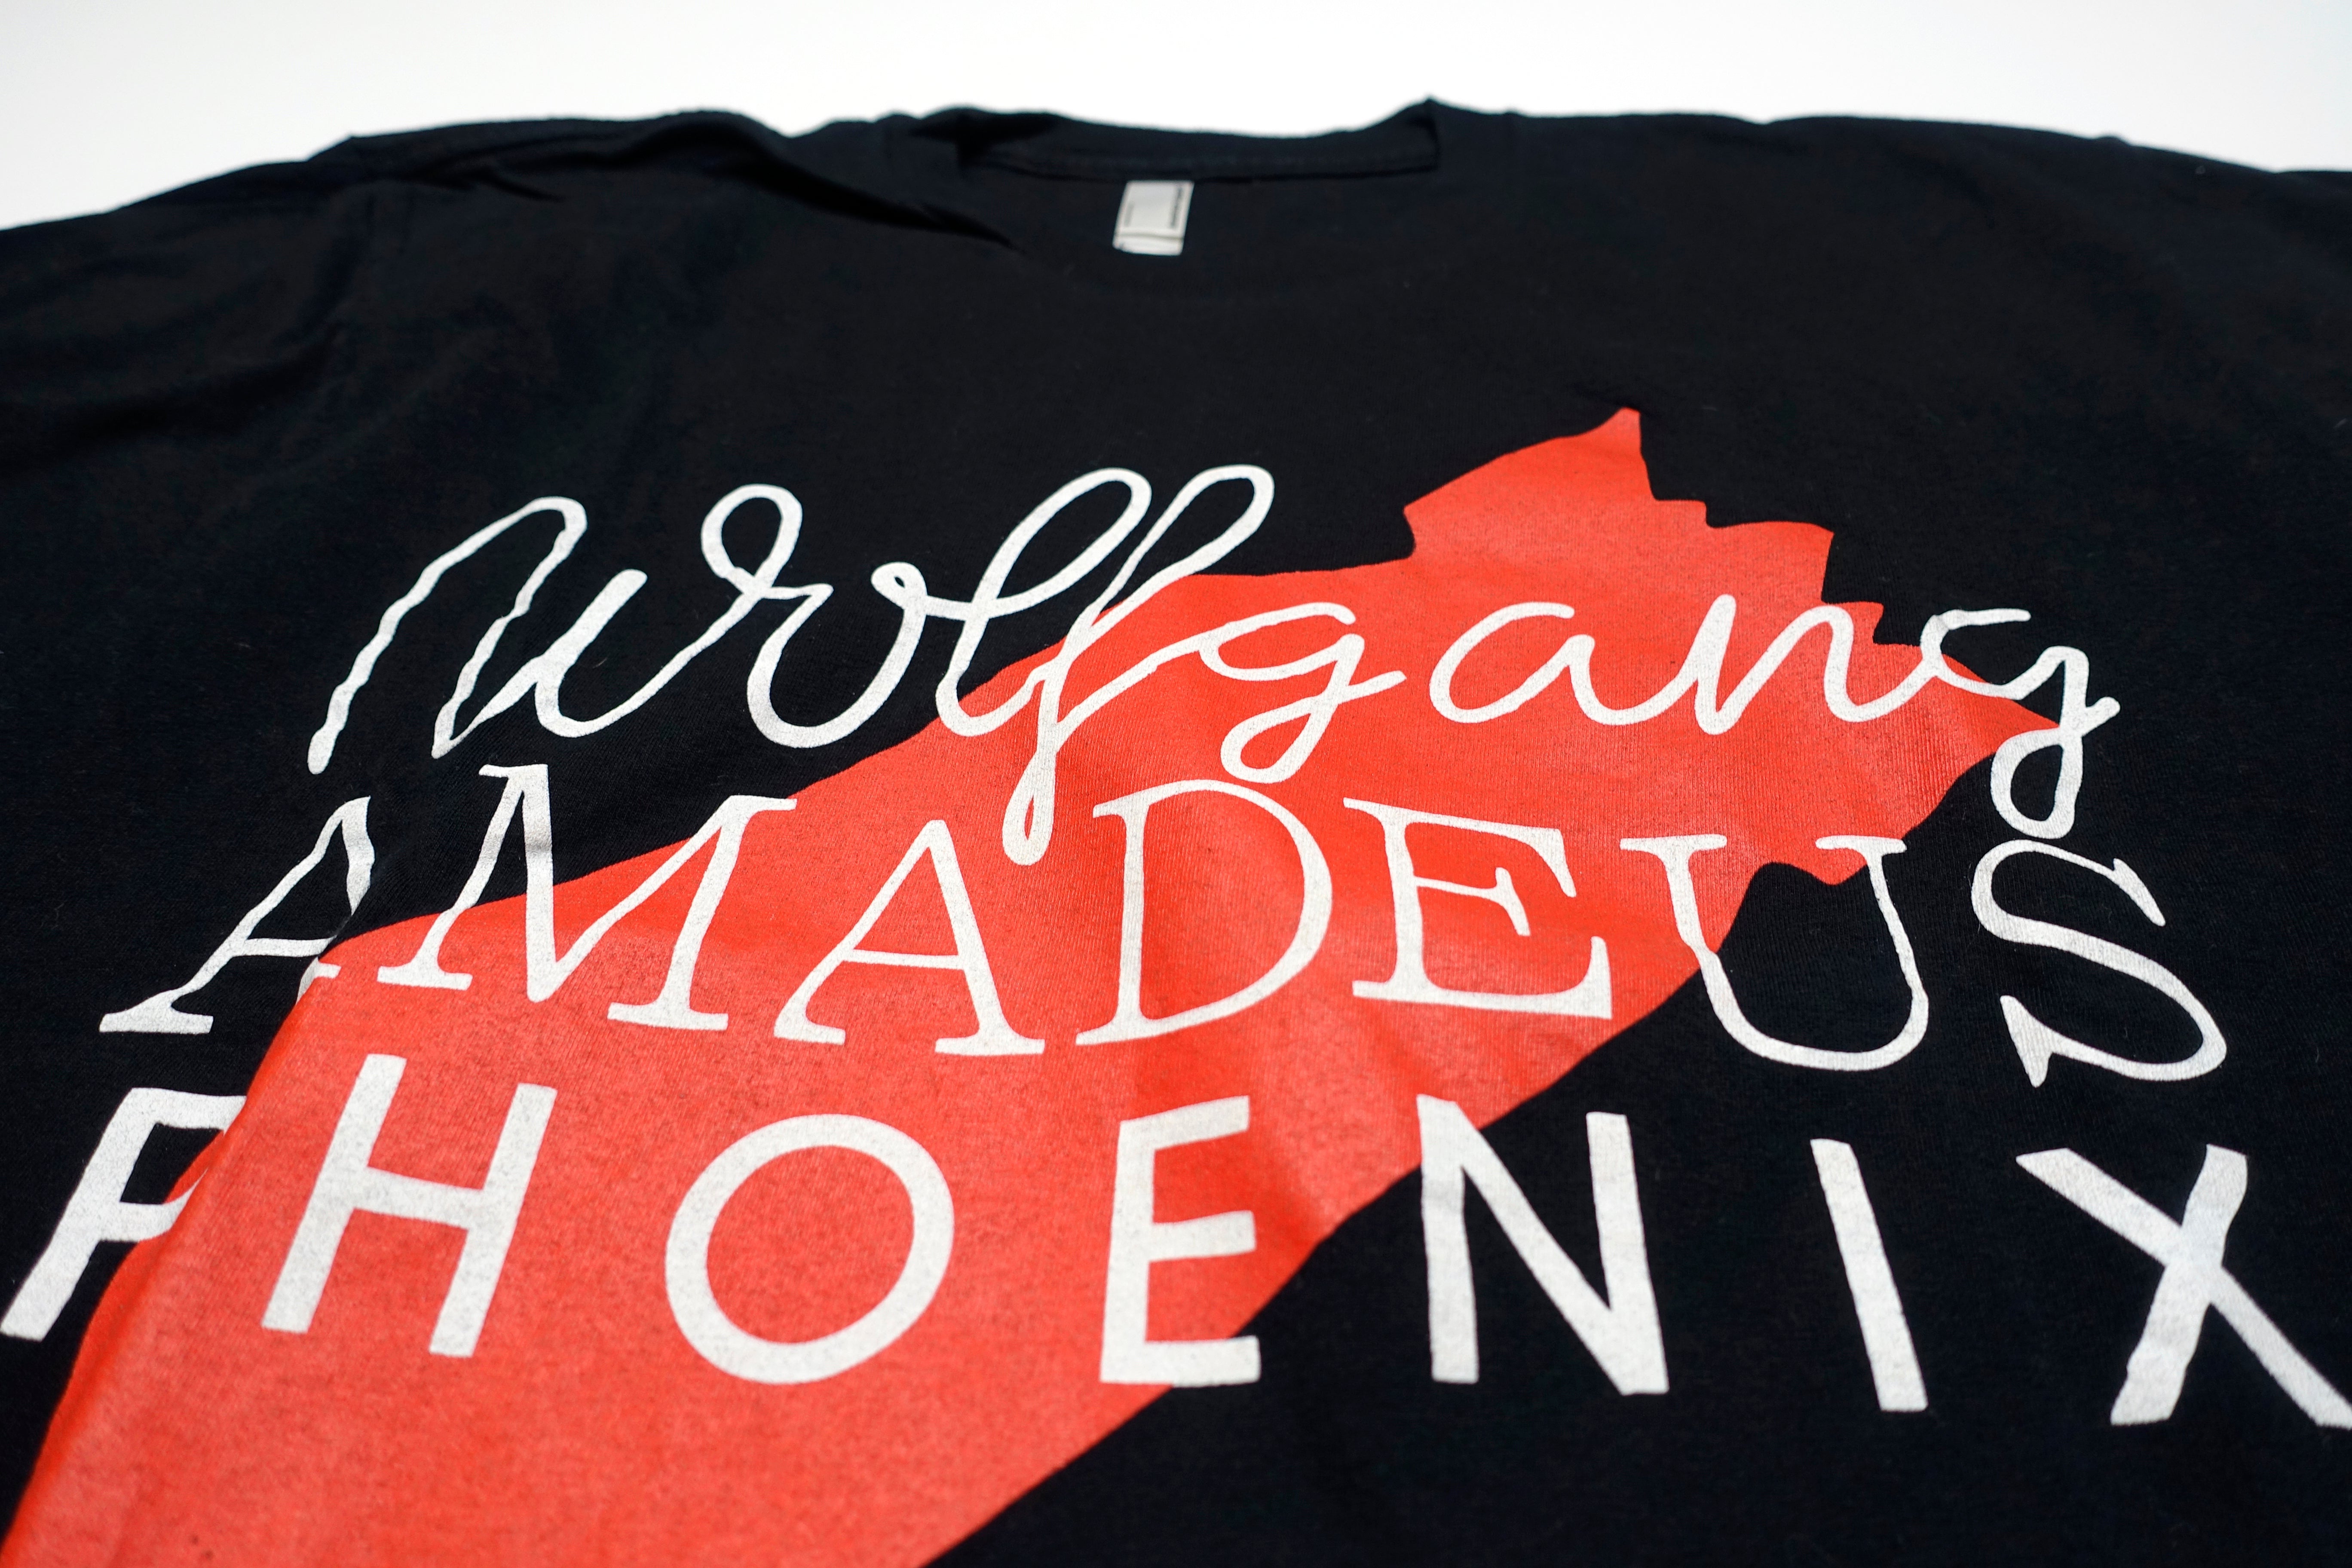 Phoenix - Wolfgang Amadeus Phoenix Cover 2010 Tour Shirt Size Large